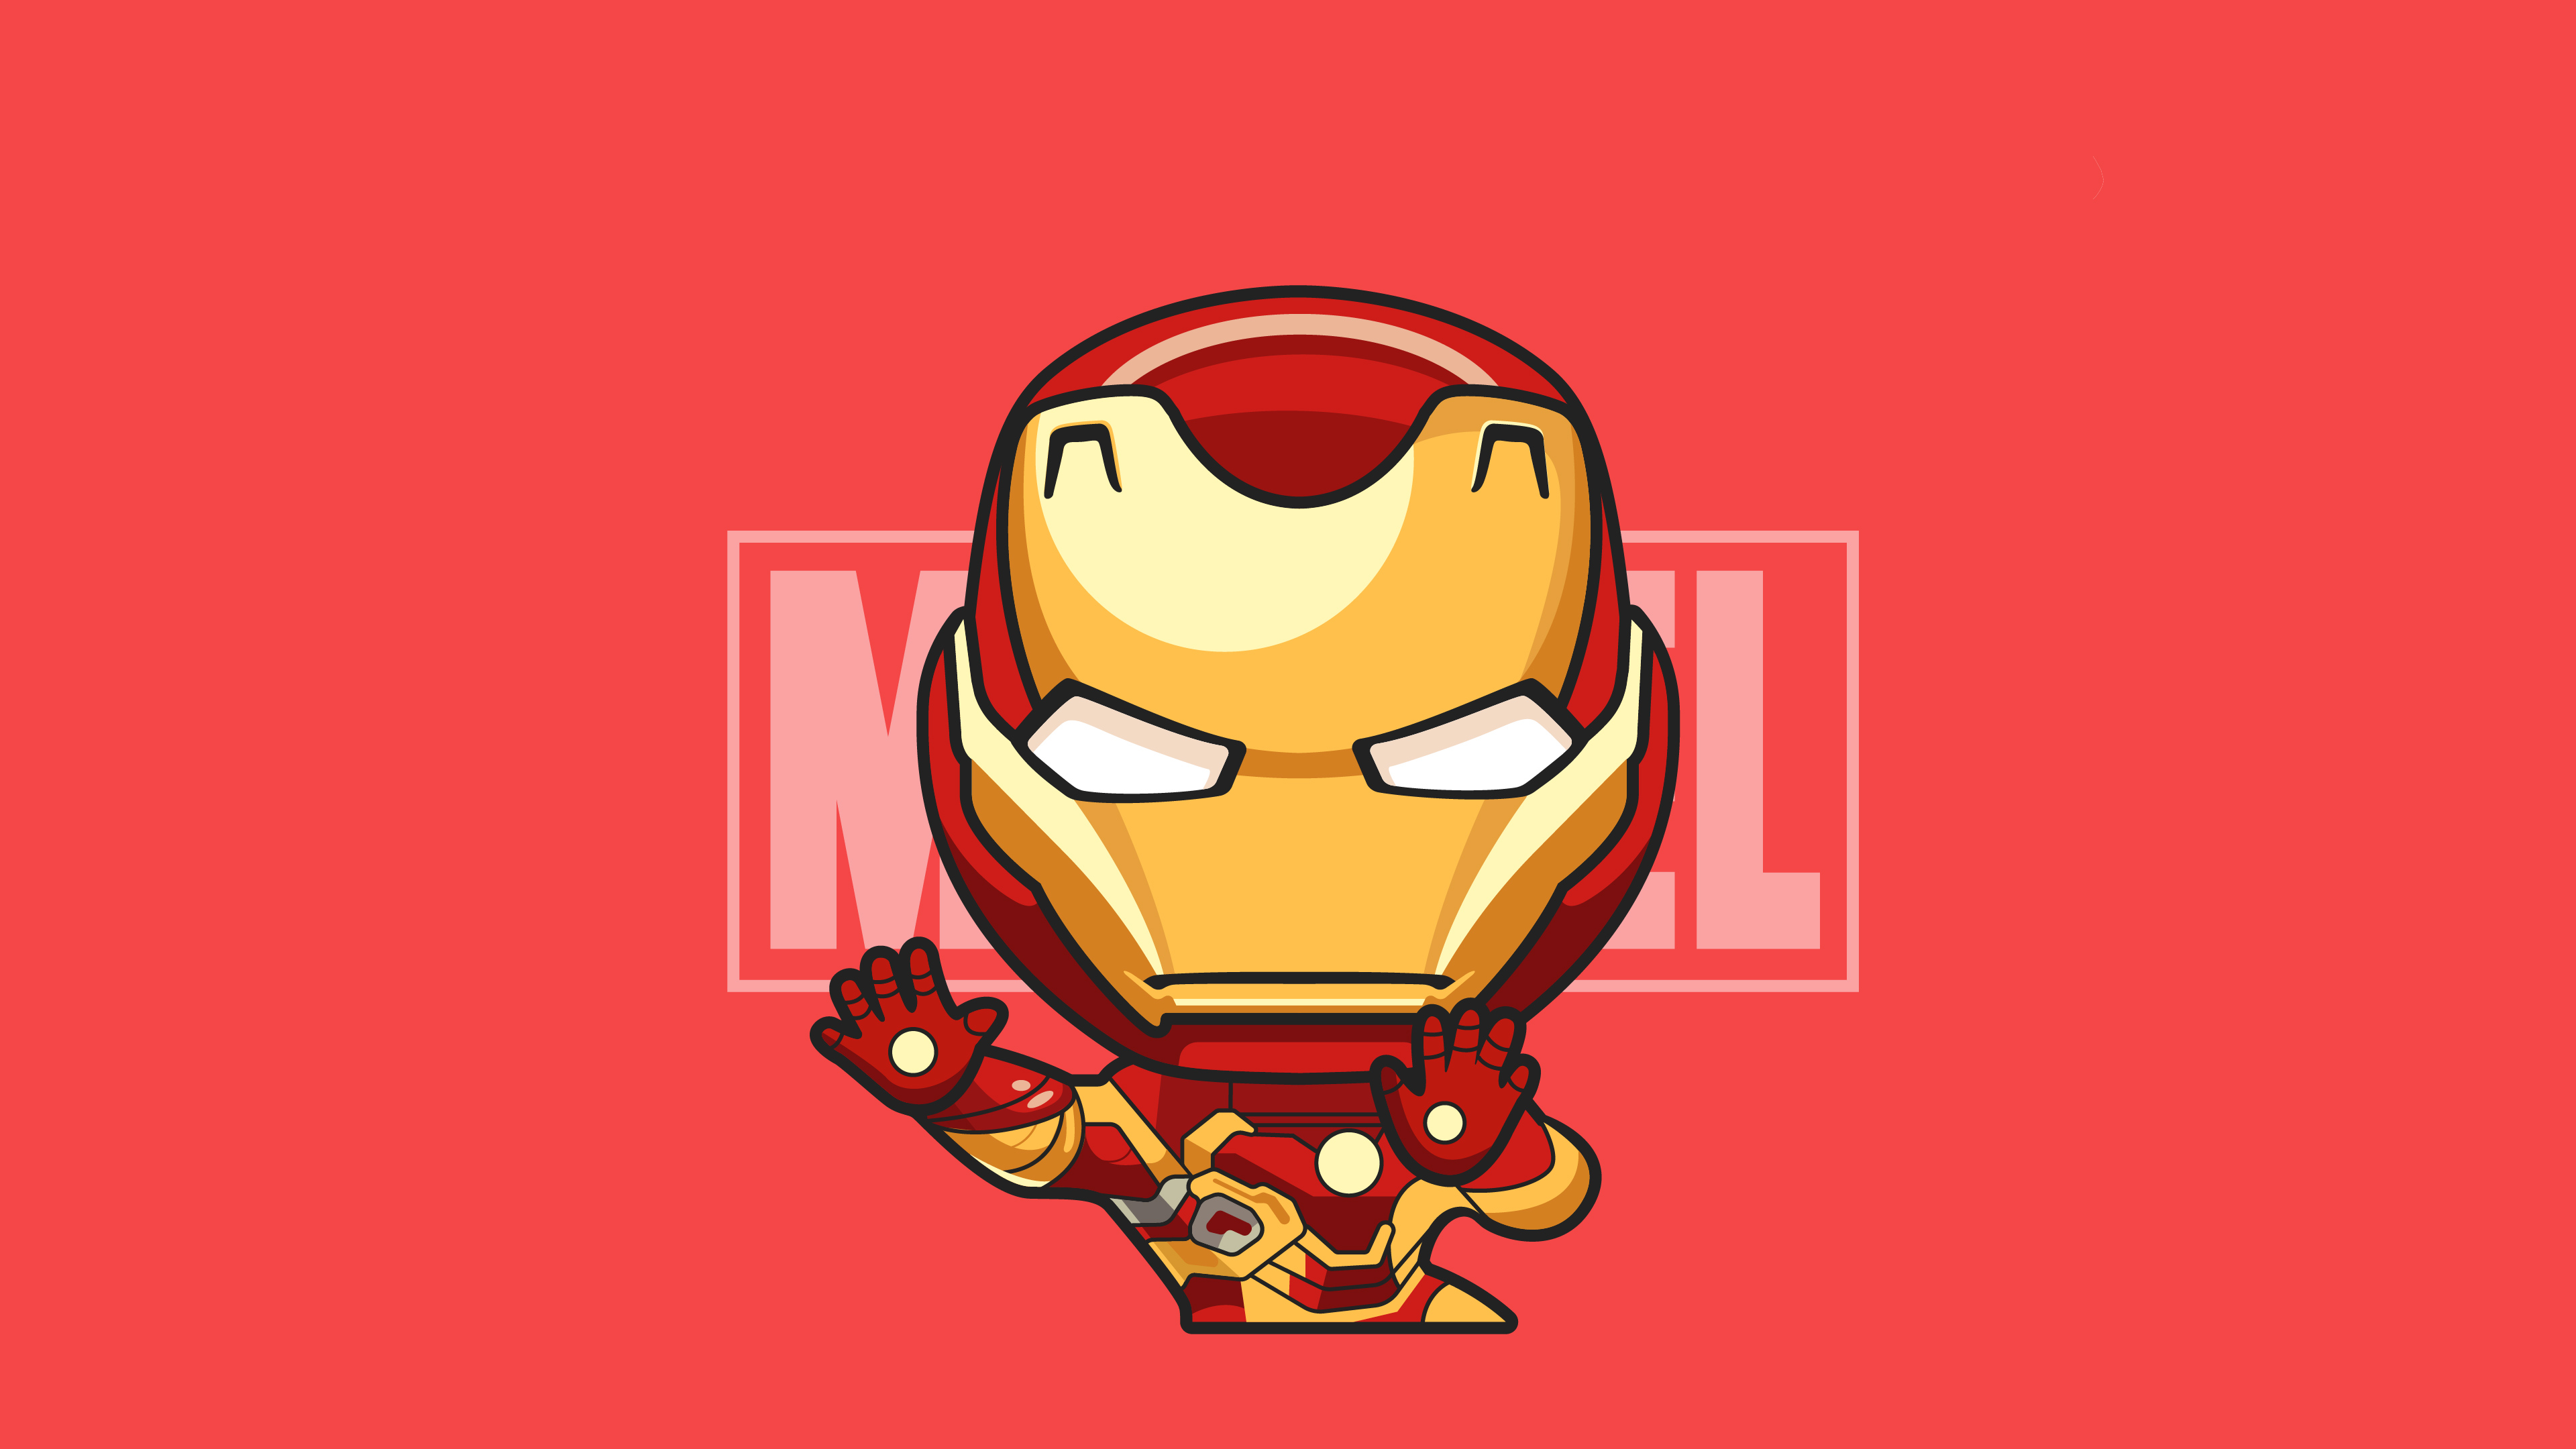 Iron Man Illustration Art 4k Wallpaper Hd Superheroes Wallpapers 4k Wallpapers Images